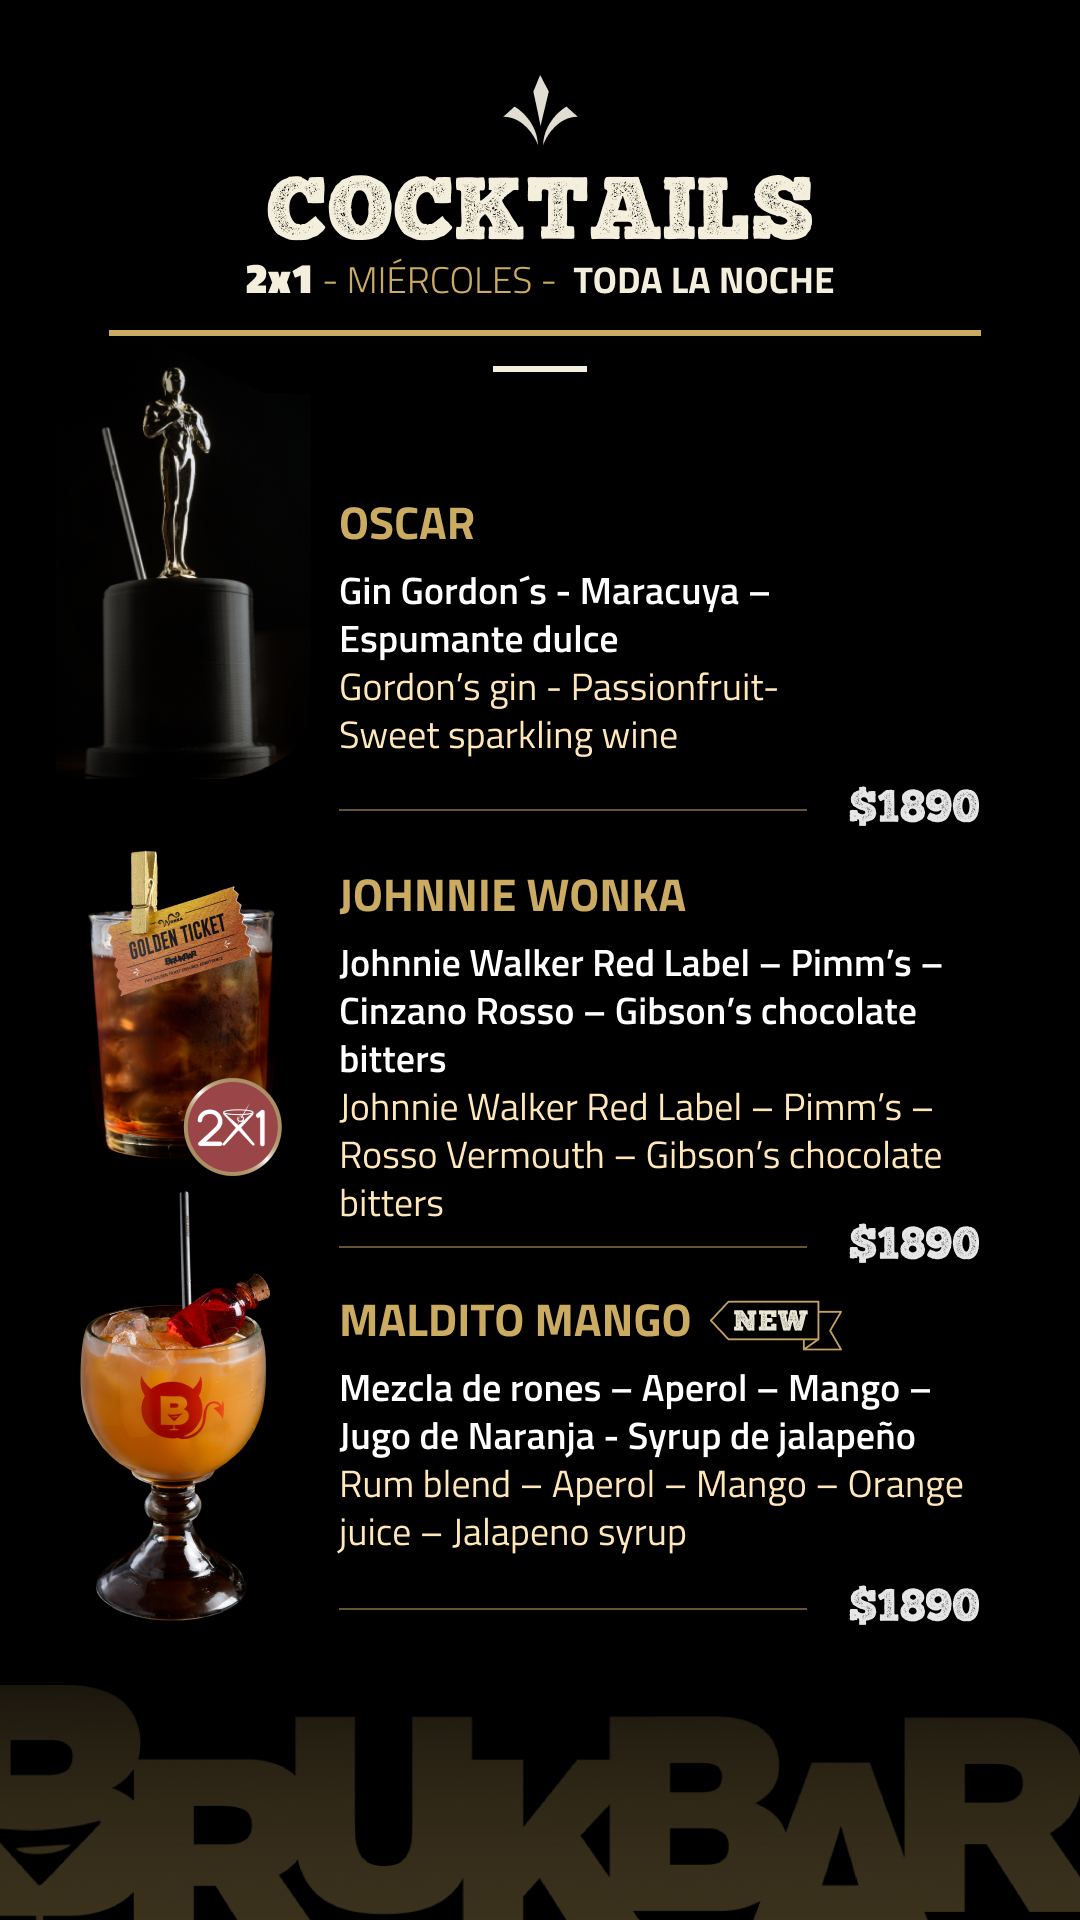 Cocktails 1